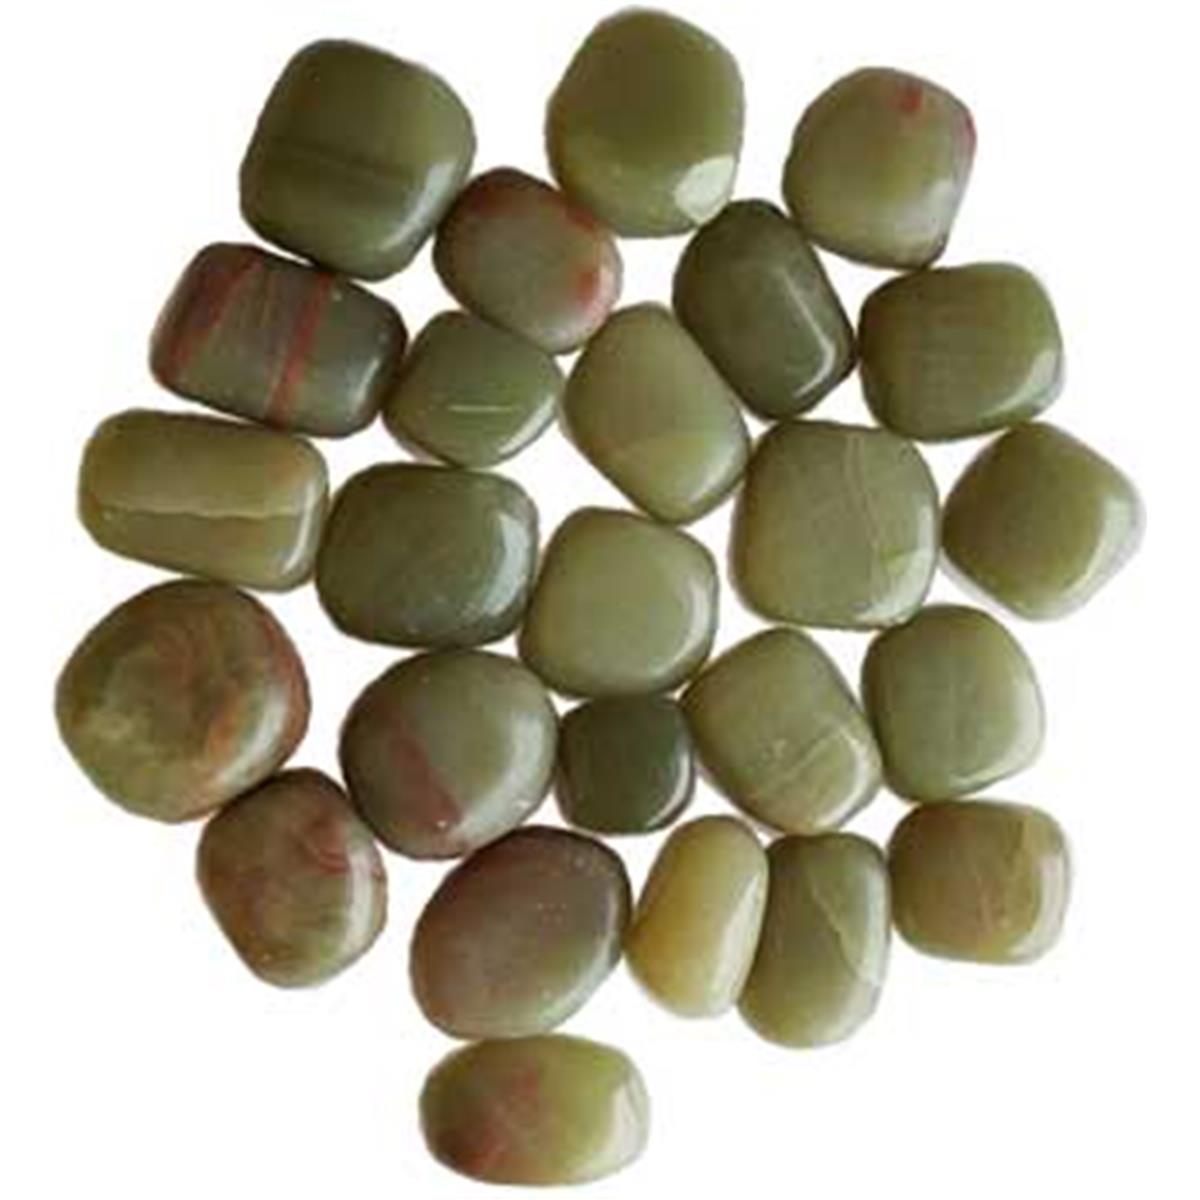 Picture of AzureGreen GTARAGGB 1 lbs Aragonite Tumbled Stones - Green